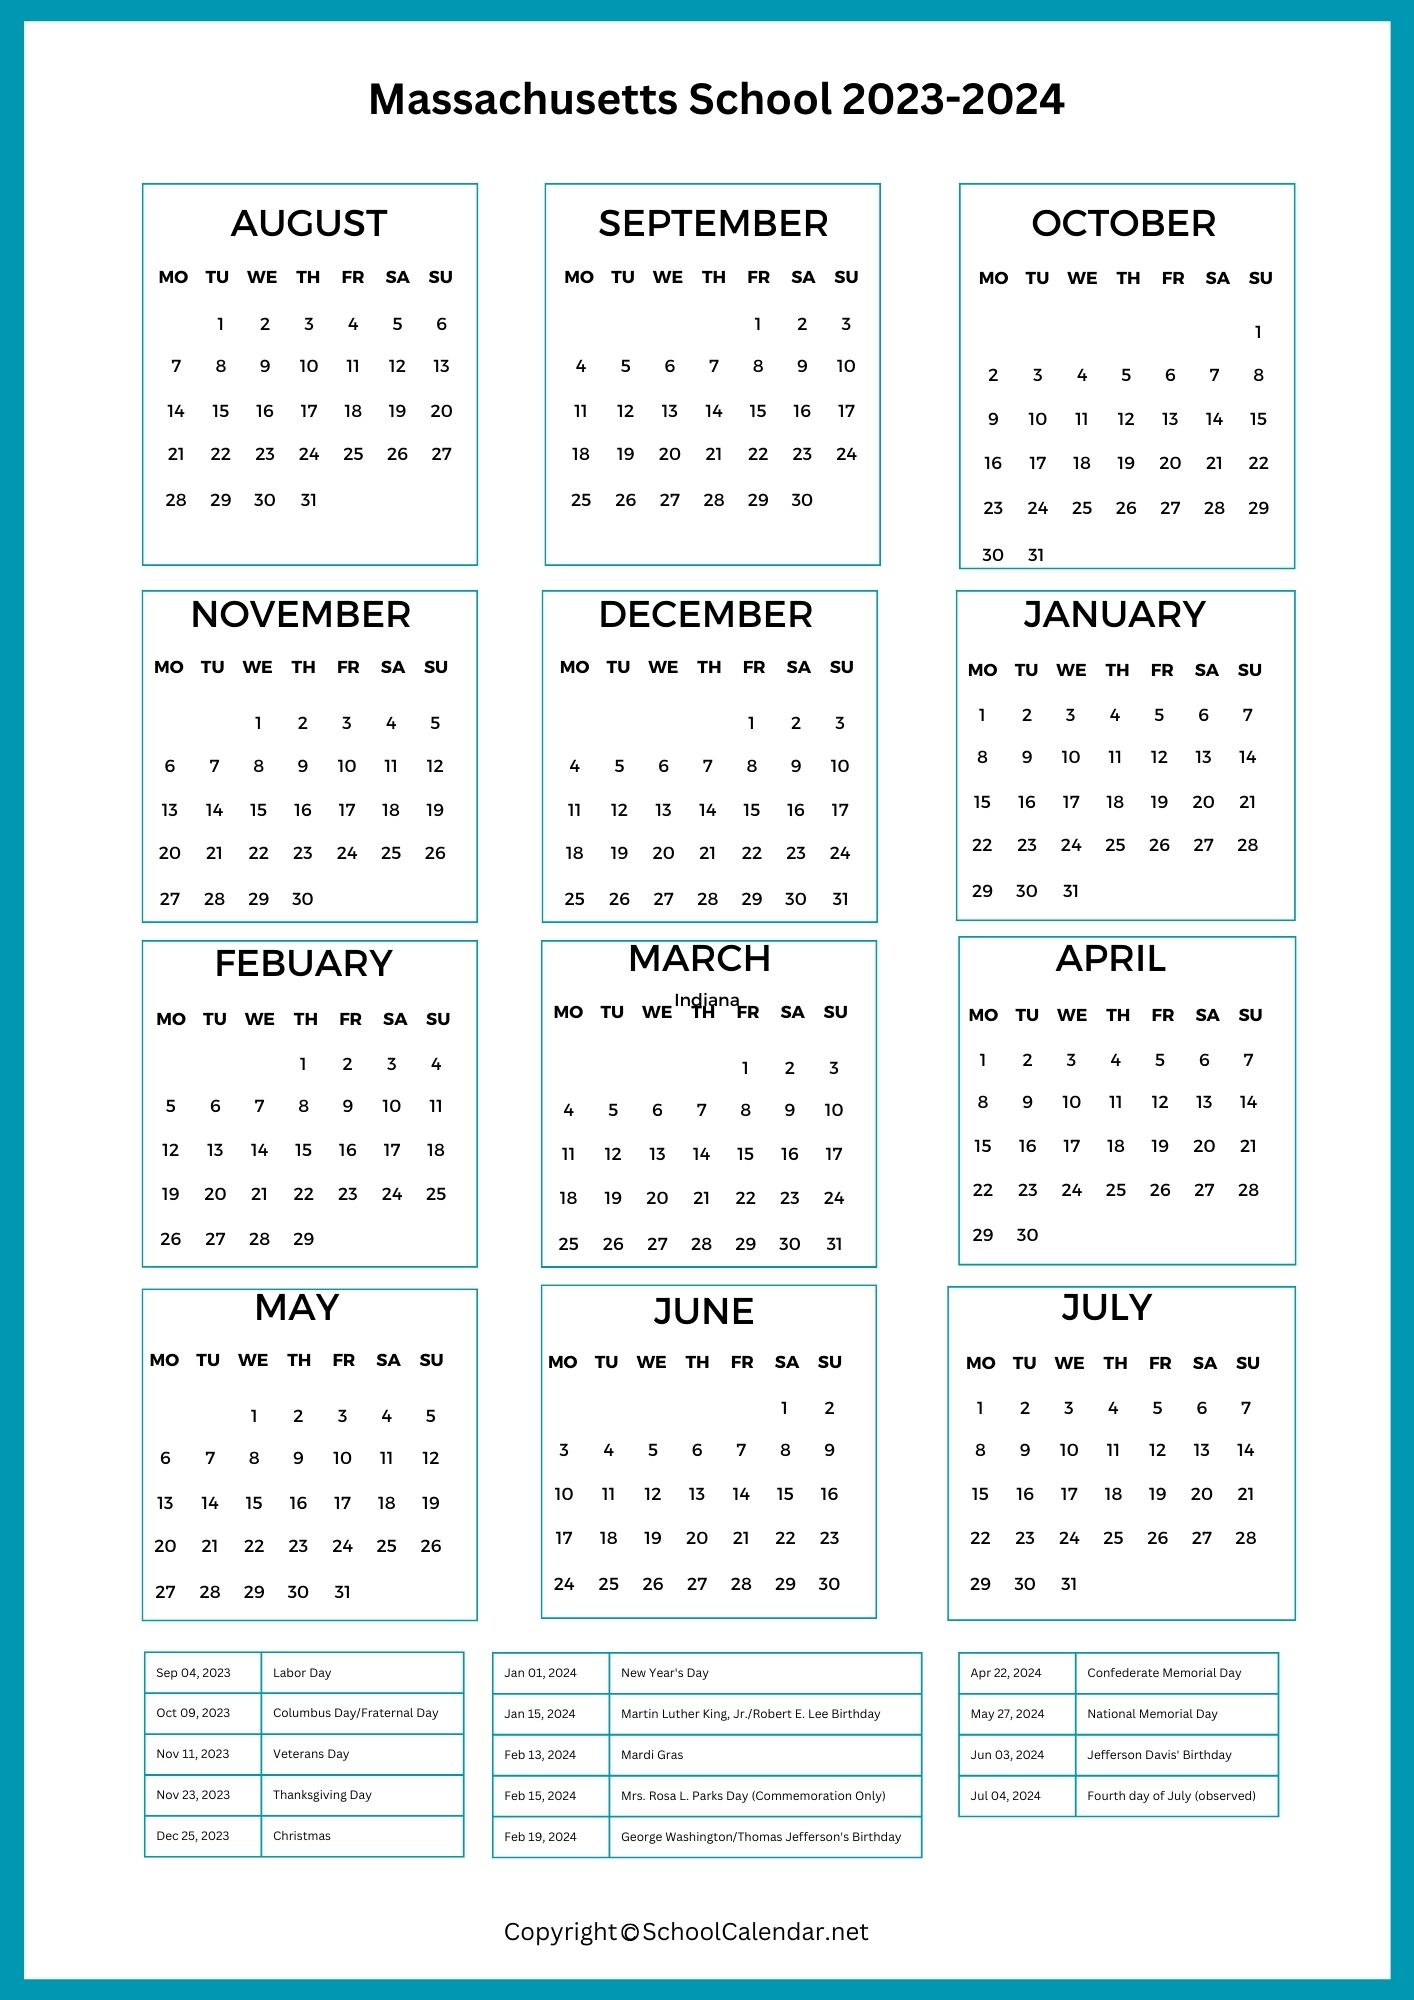 Massachusetts School Holiday Calendar 2023